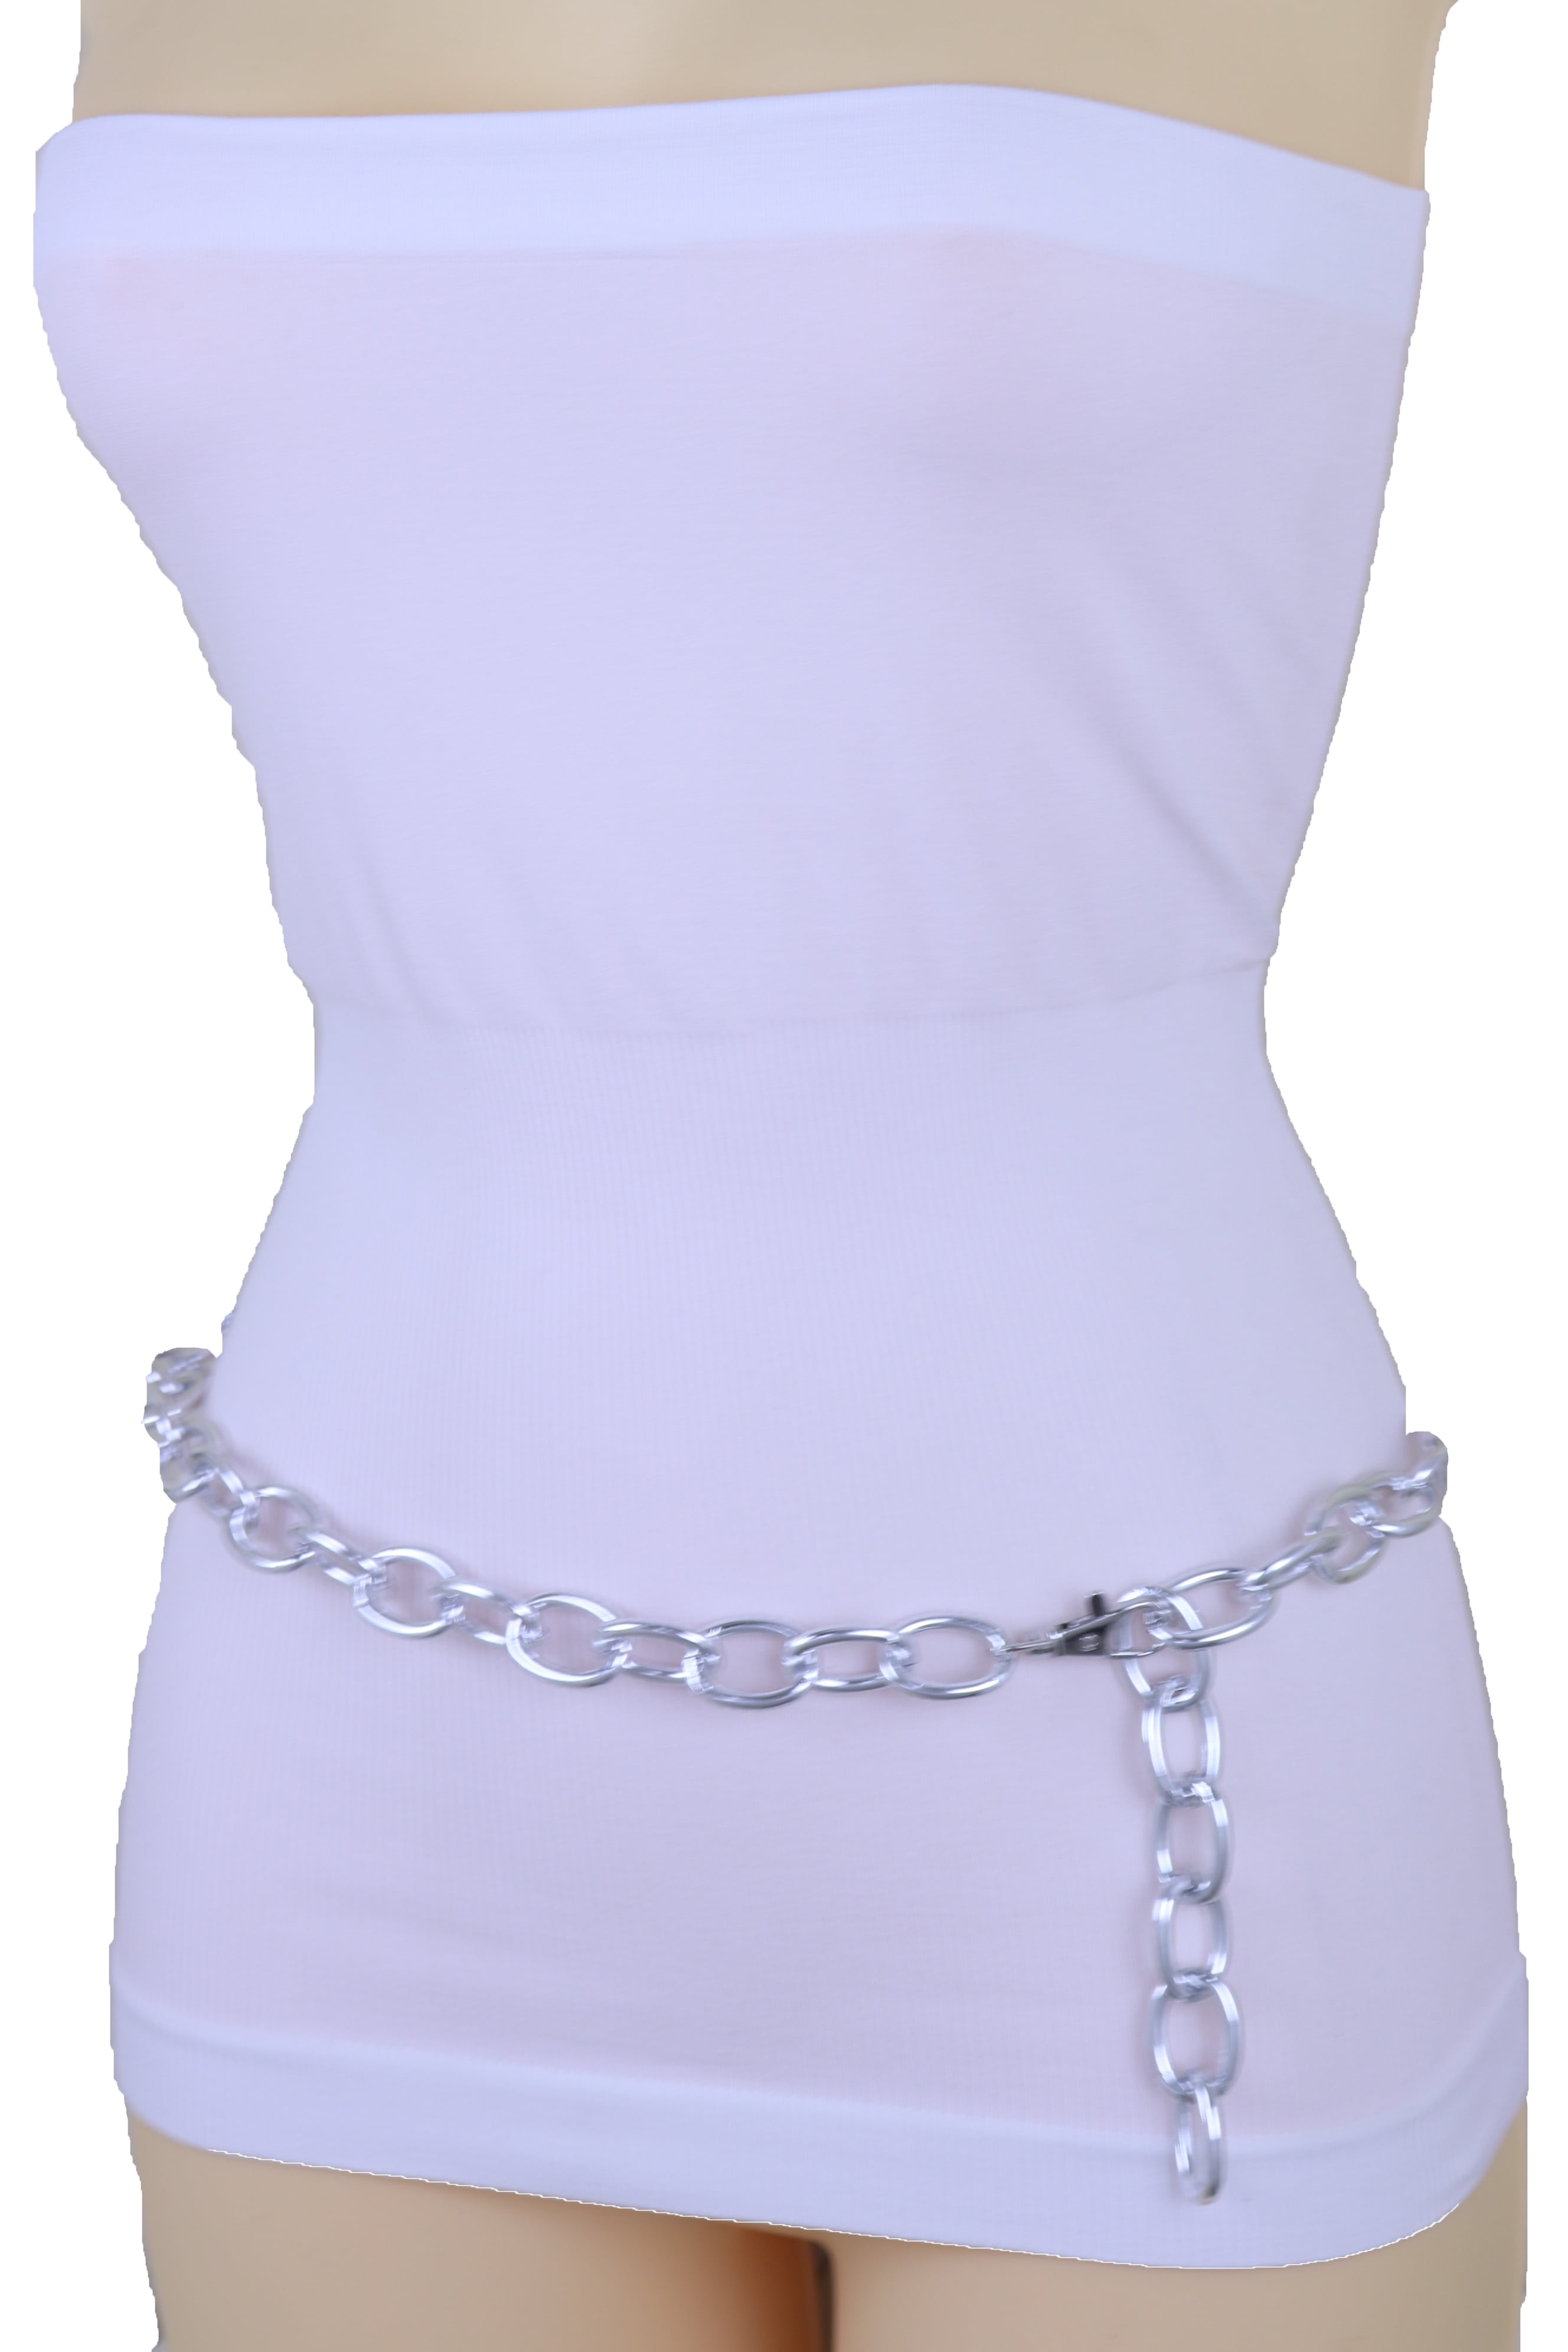 Women Belt Silver Chunky Metal Chain Thick Link Hip Waist Bling Plus Size M L XL 